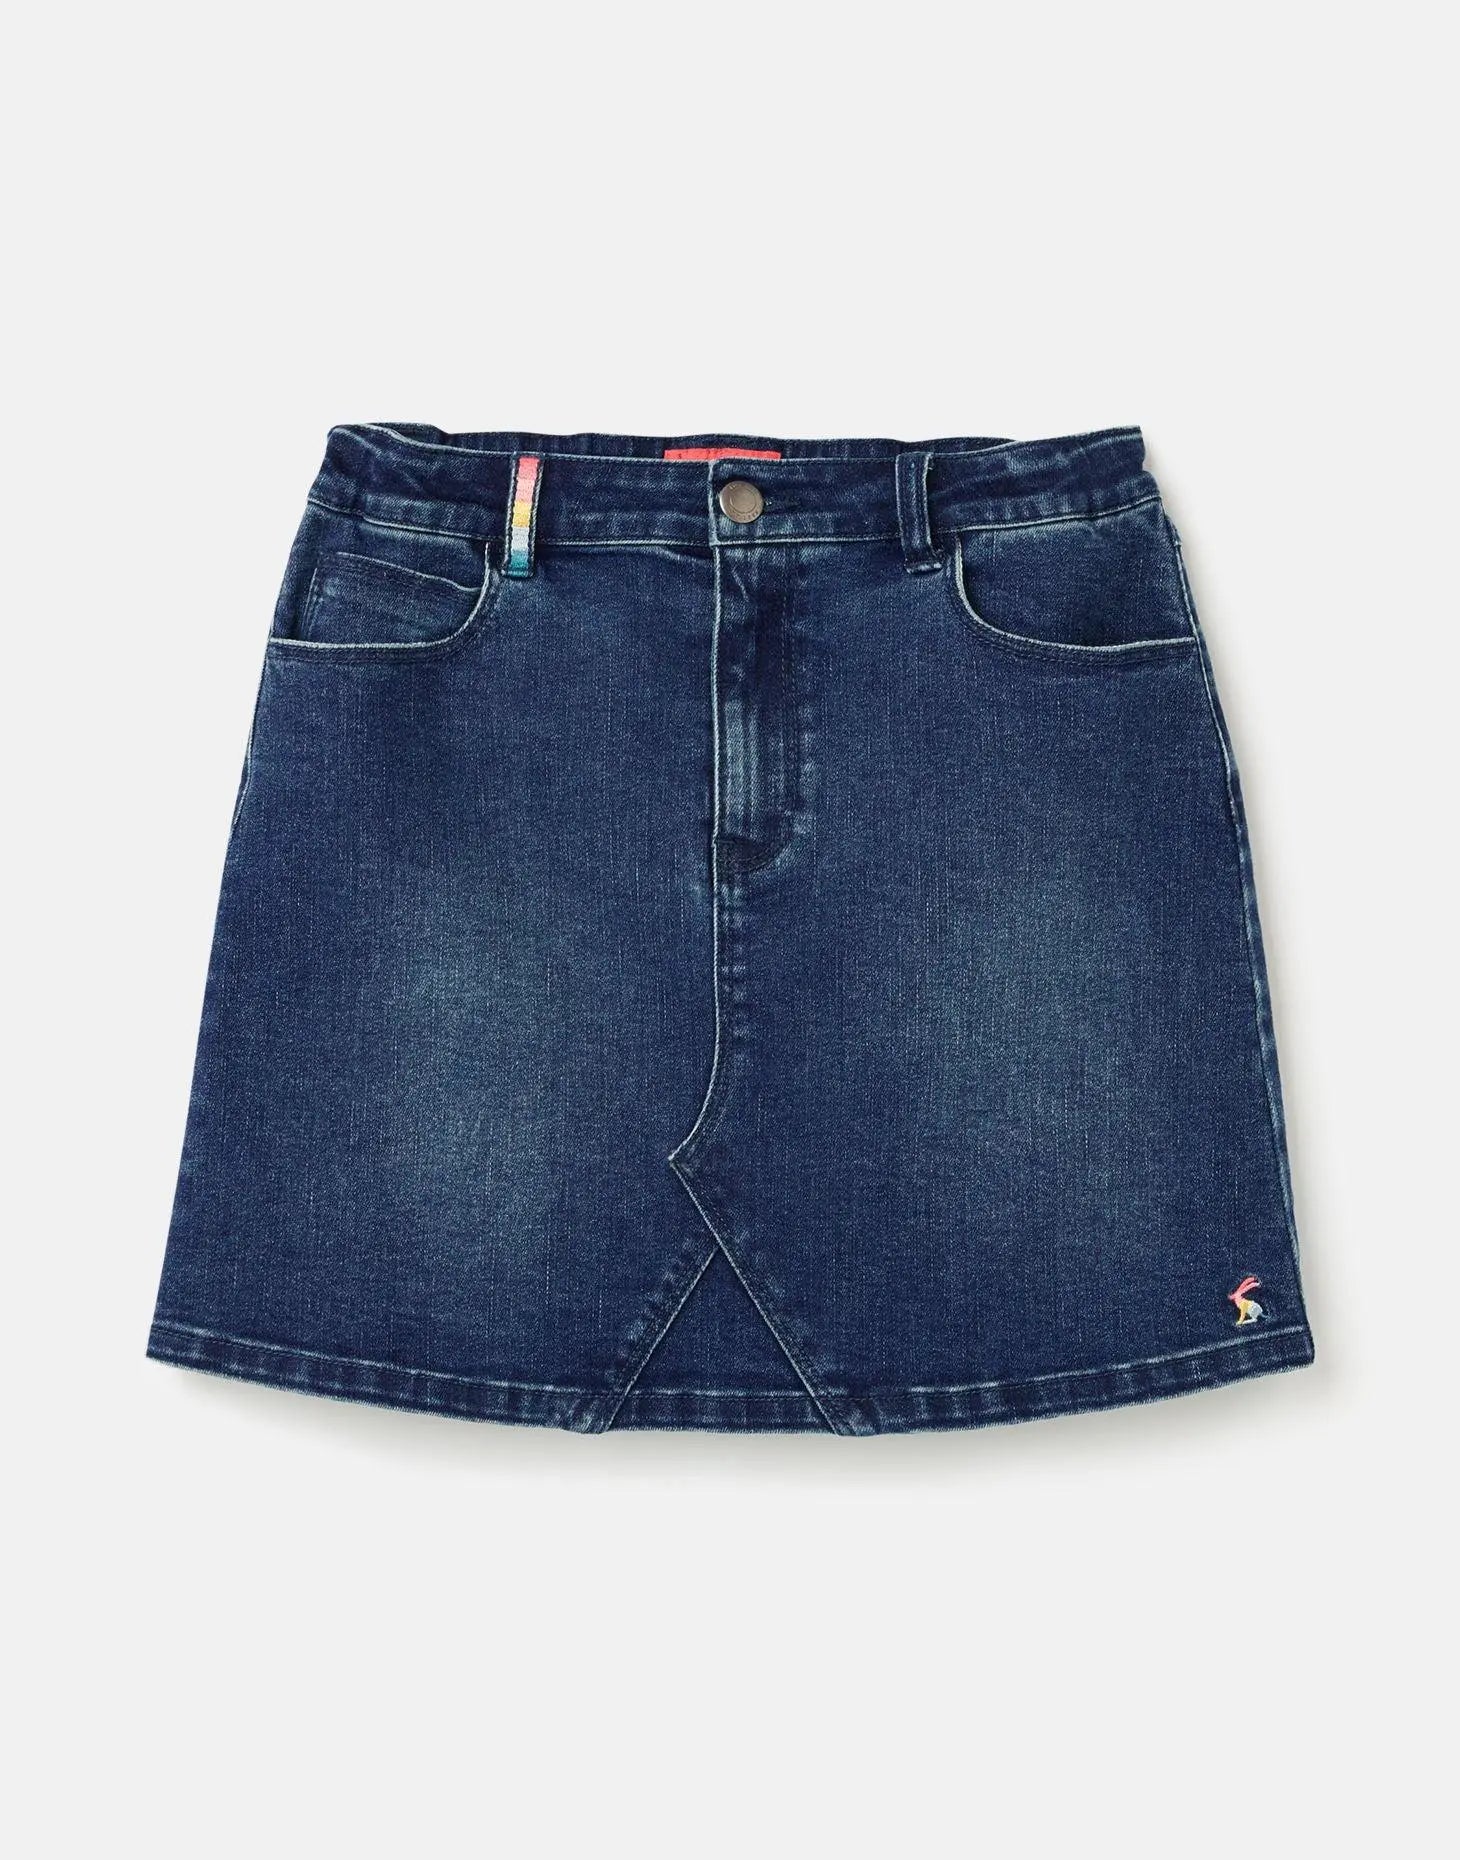 Girls Hollis 5 Pocket Denim Skirt | Joules - Jenni Kidz